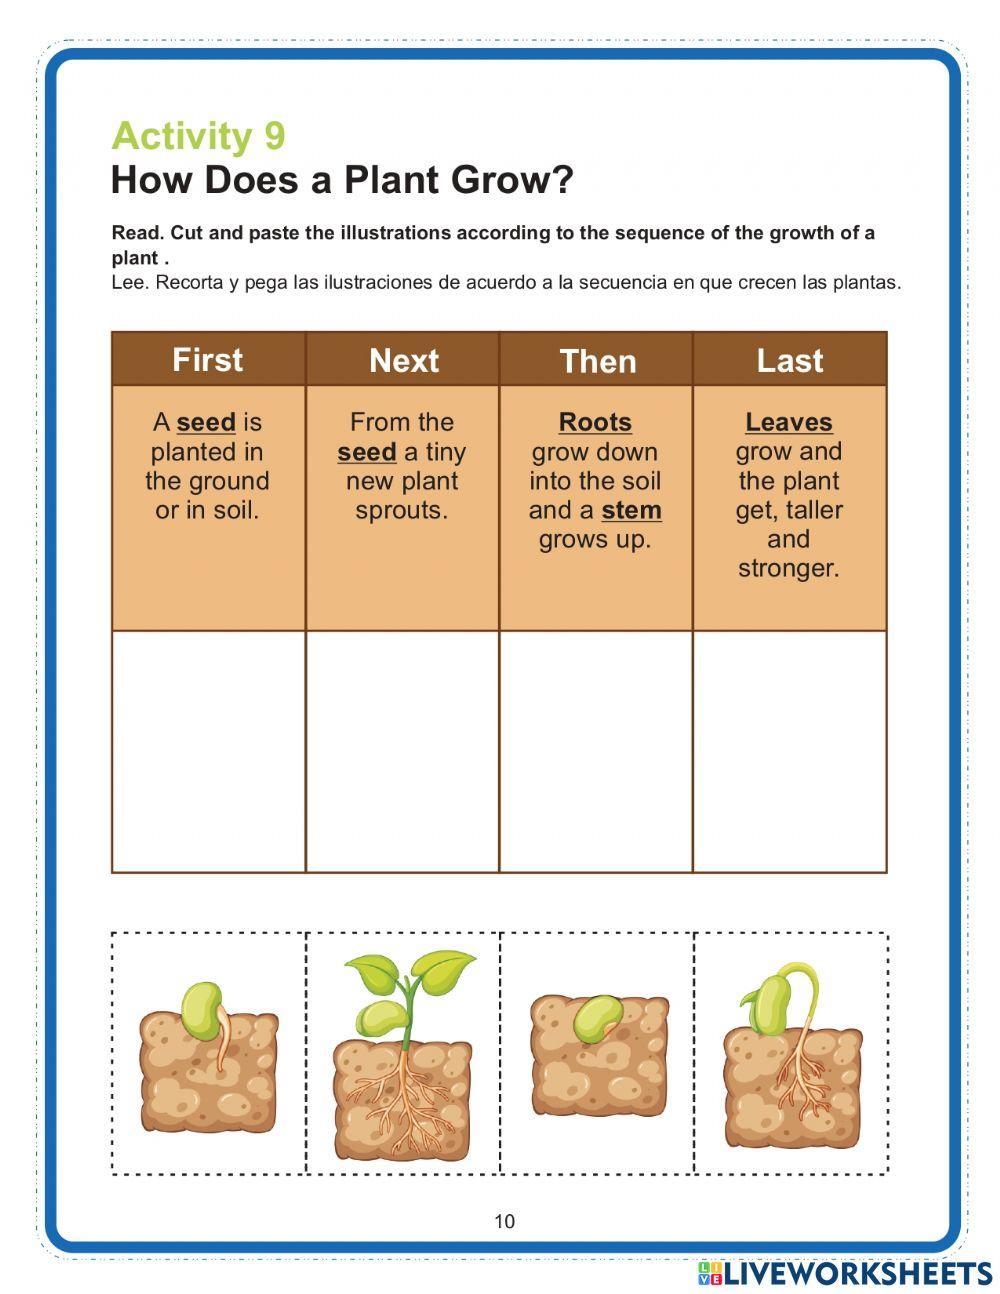 How does a plant grow?